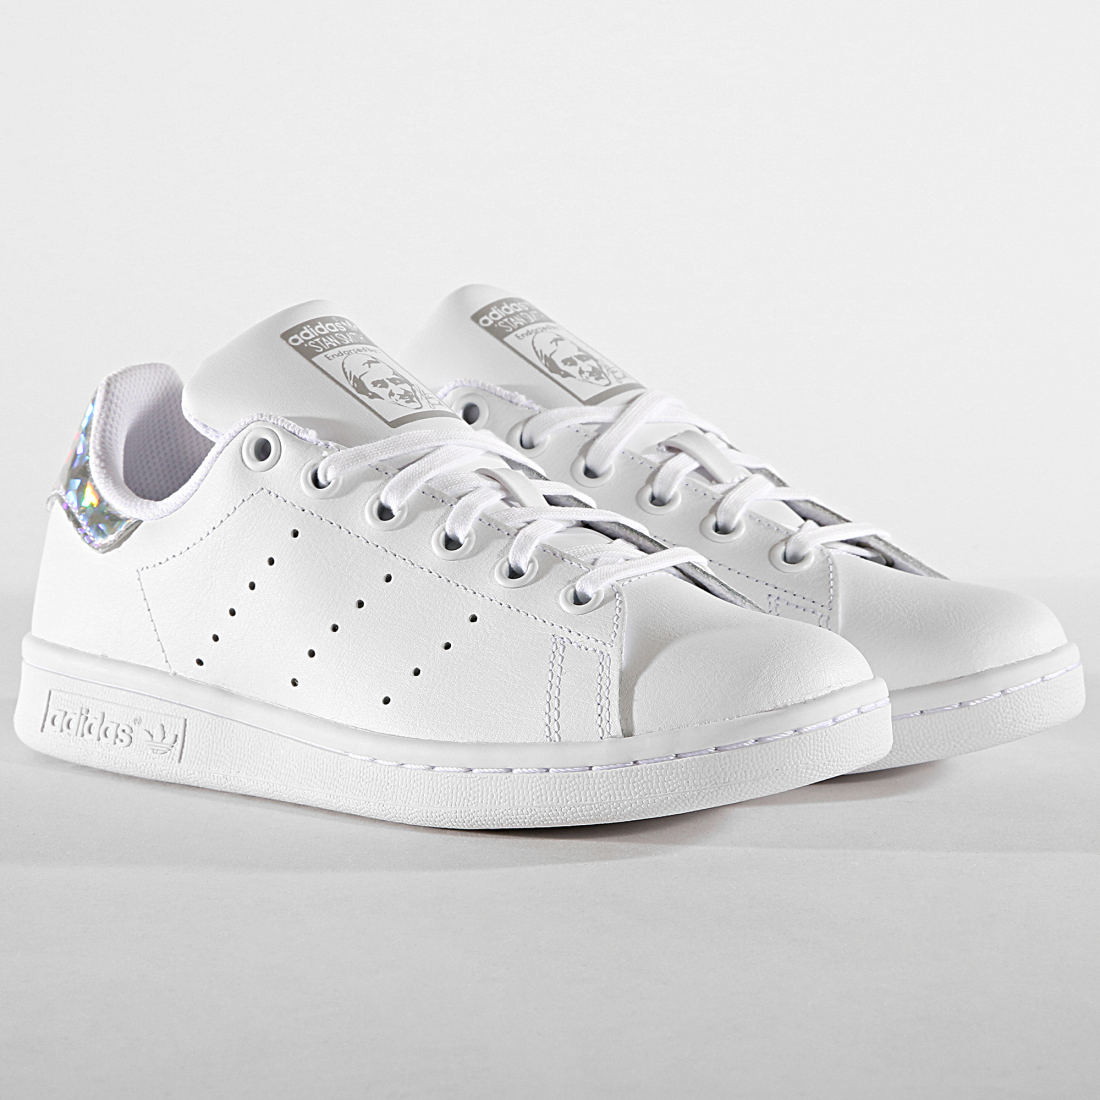 adidas - Baskets Femme Stan Smith EE8483 Footwear White ...